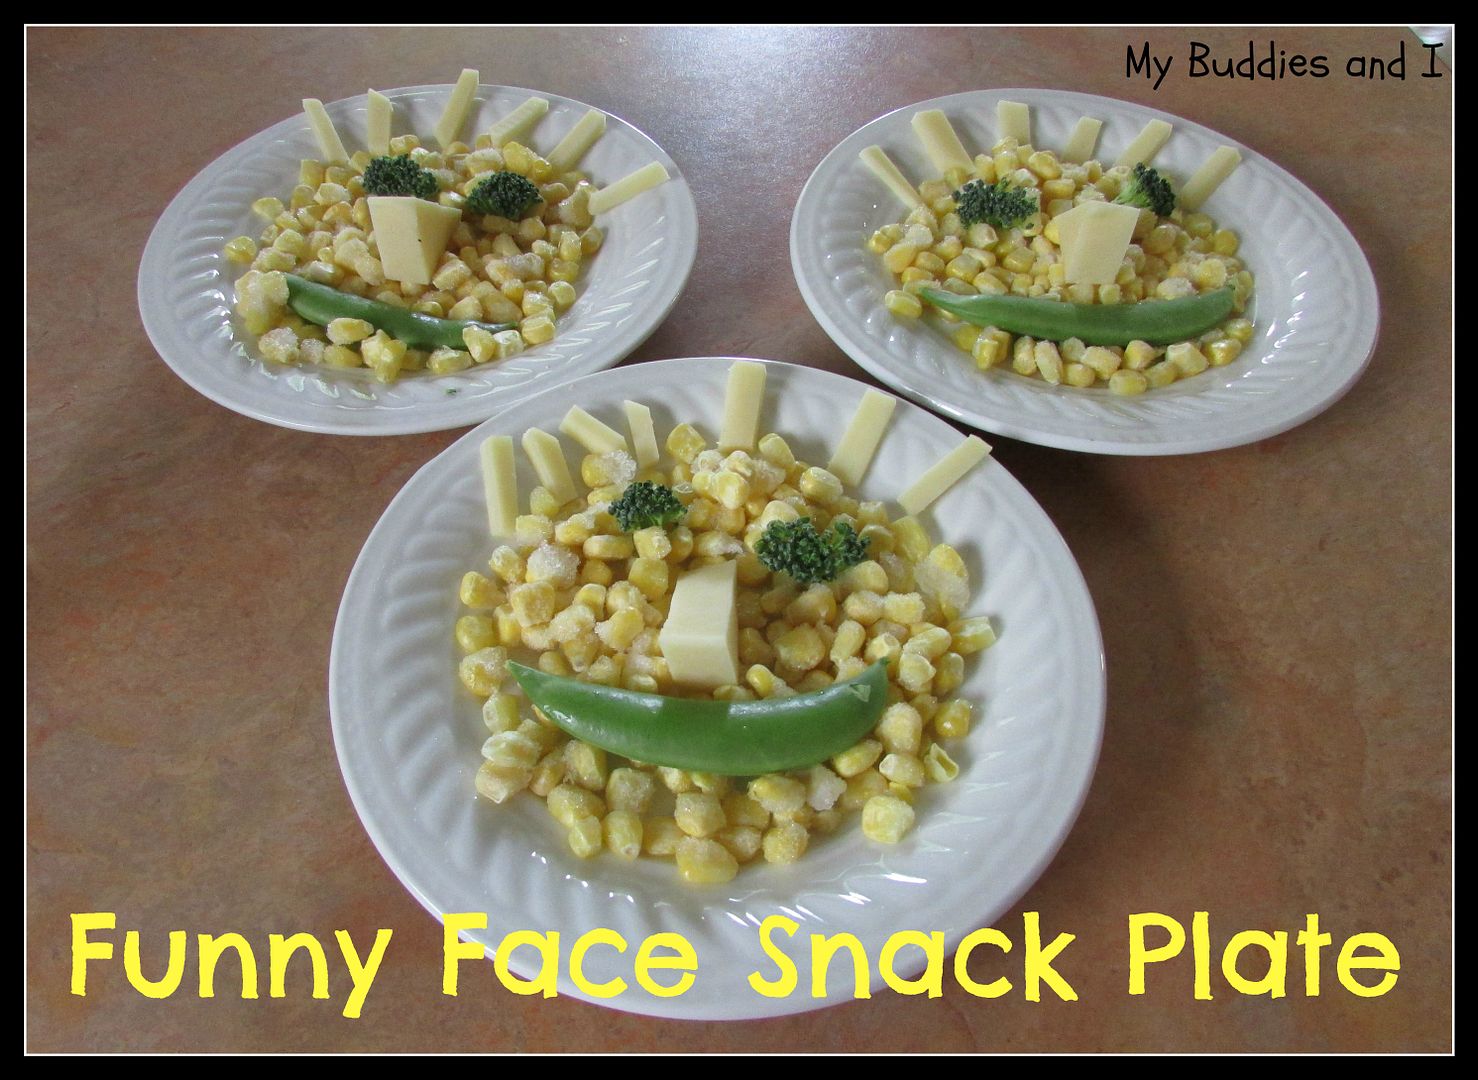 snack plate photo funnyface-2.jpg